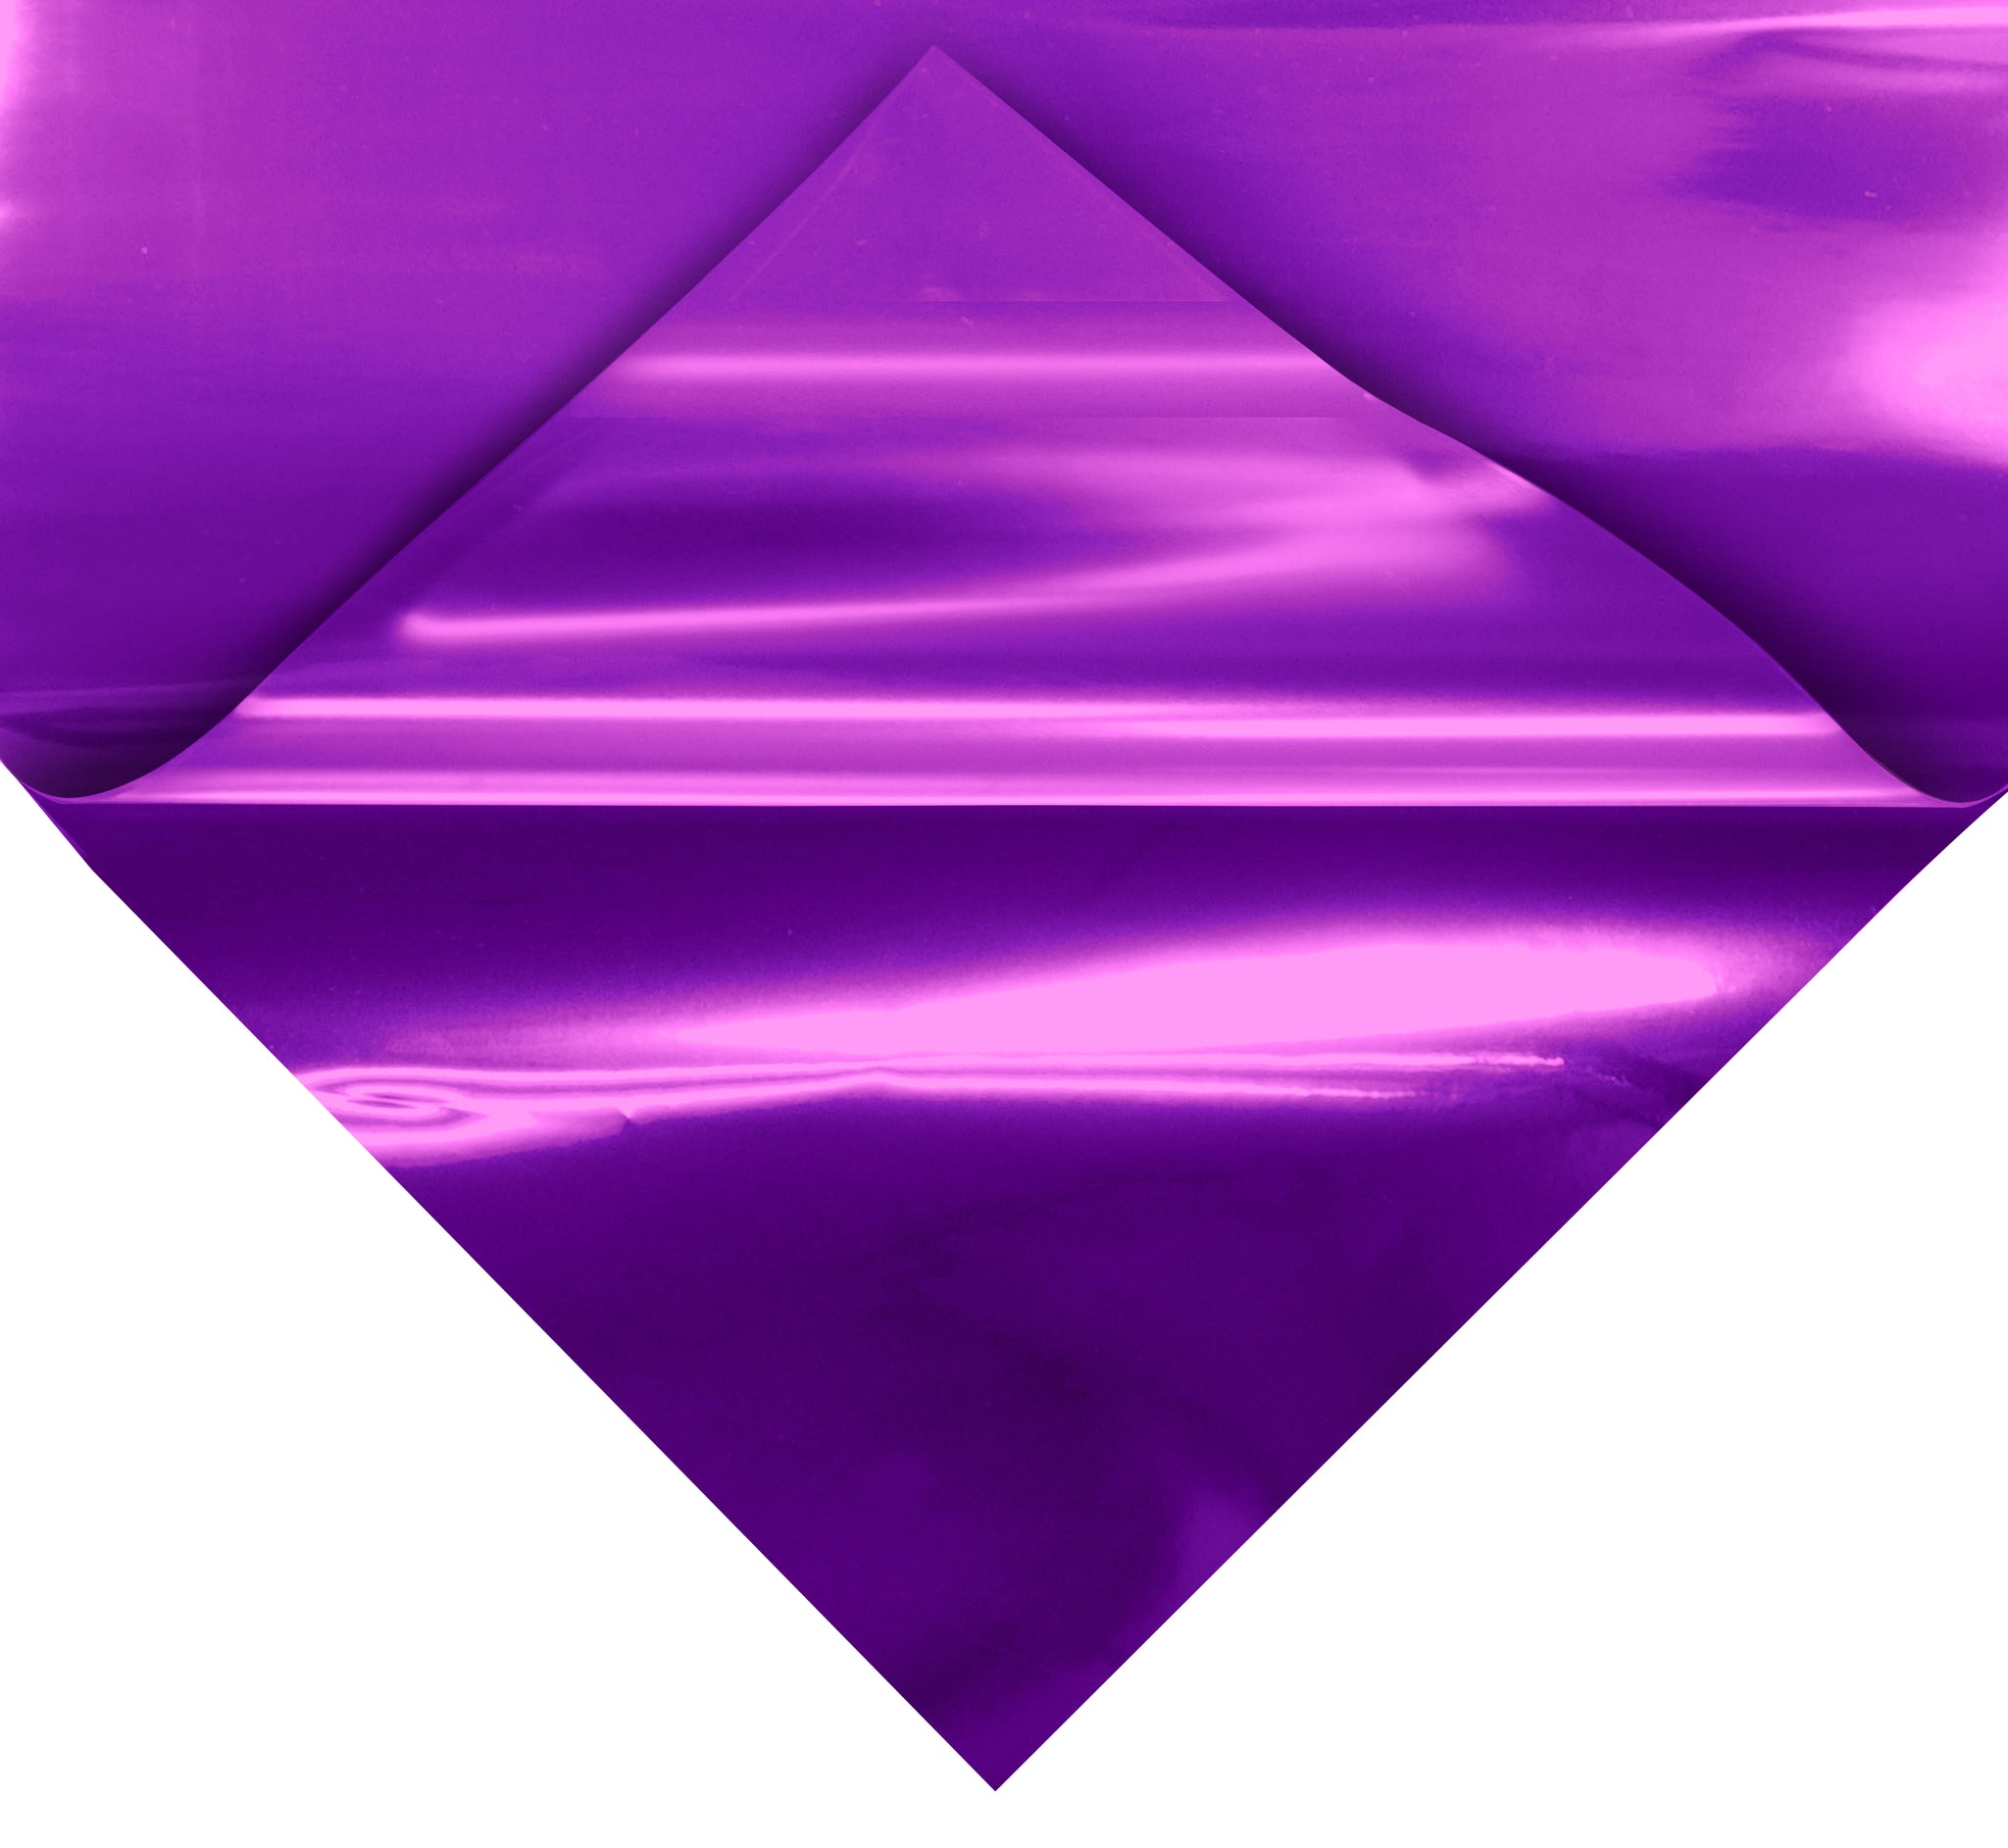 V2 Pro Purple Glitter Heat Transfer Film, VViViD